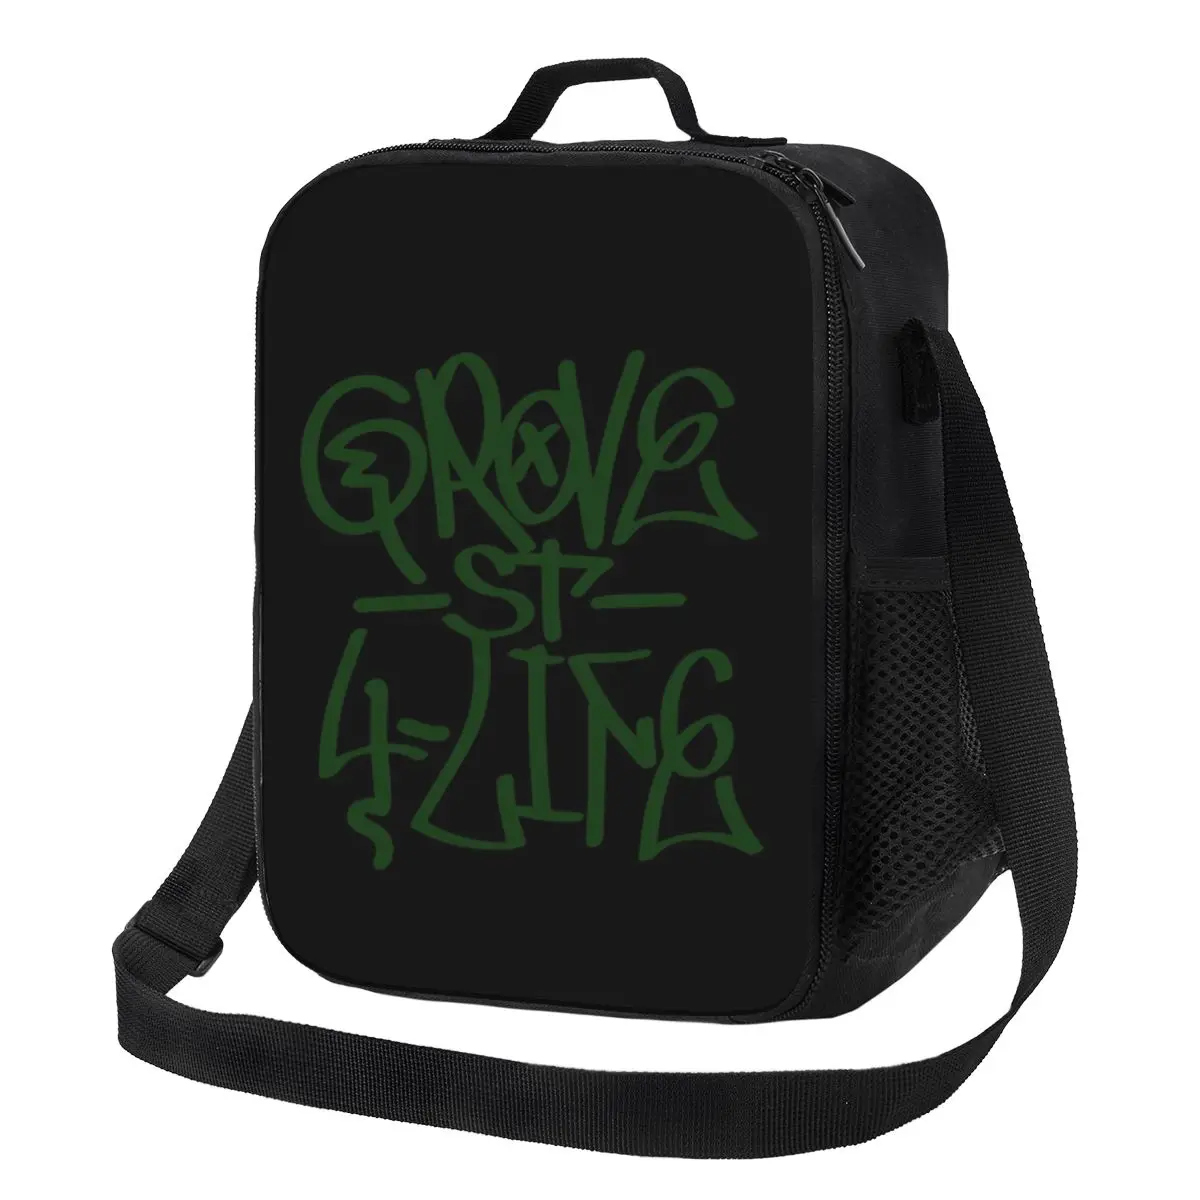 

Gta San Andreas Lunch Bag with Handle Gta San Andreas Grove St 4 Life Graffiti Travel Cooler Bag Zipper Meal Modern Thermal Bag